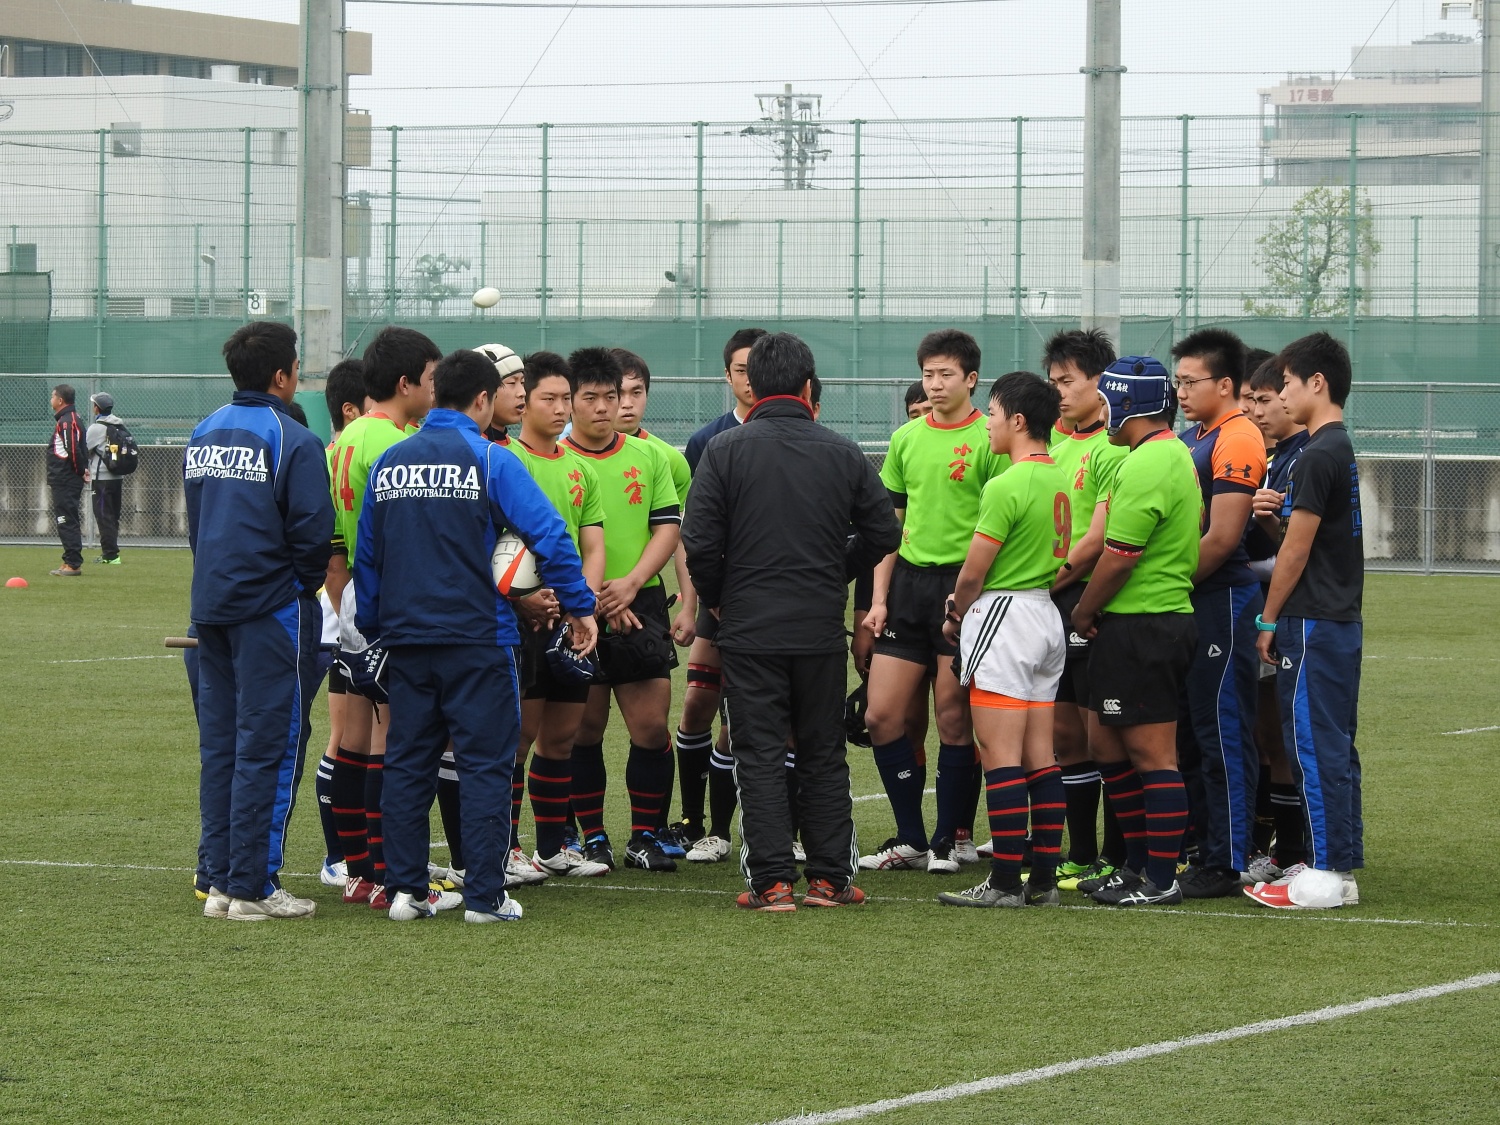 http://kokura-rugby.sakura.ne.jp/90001_xlarge.jpg